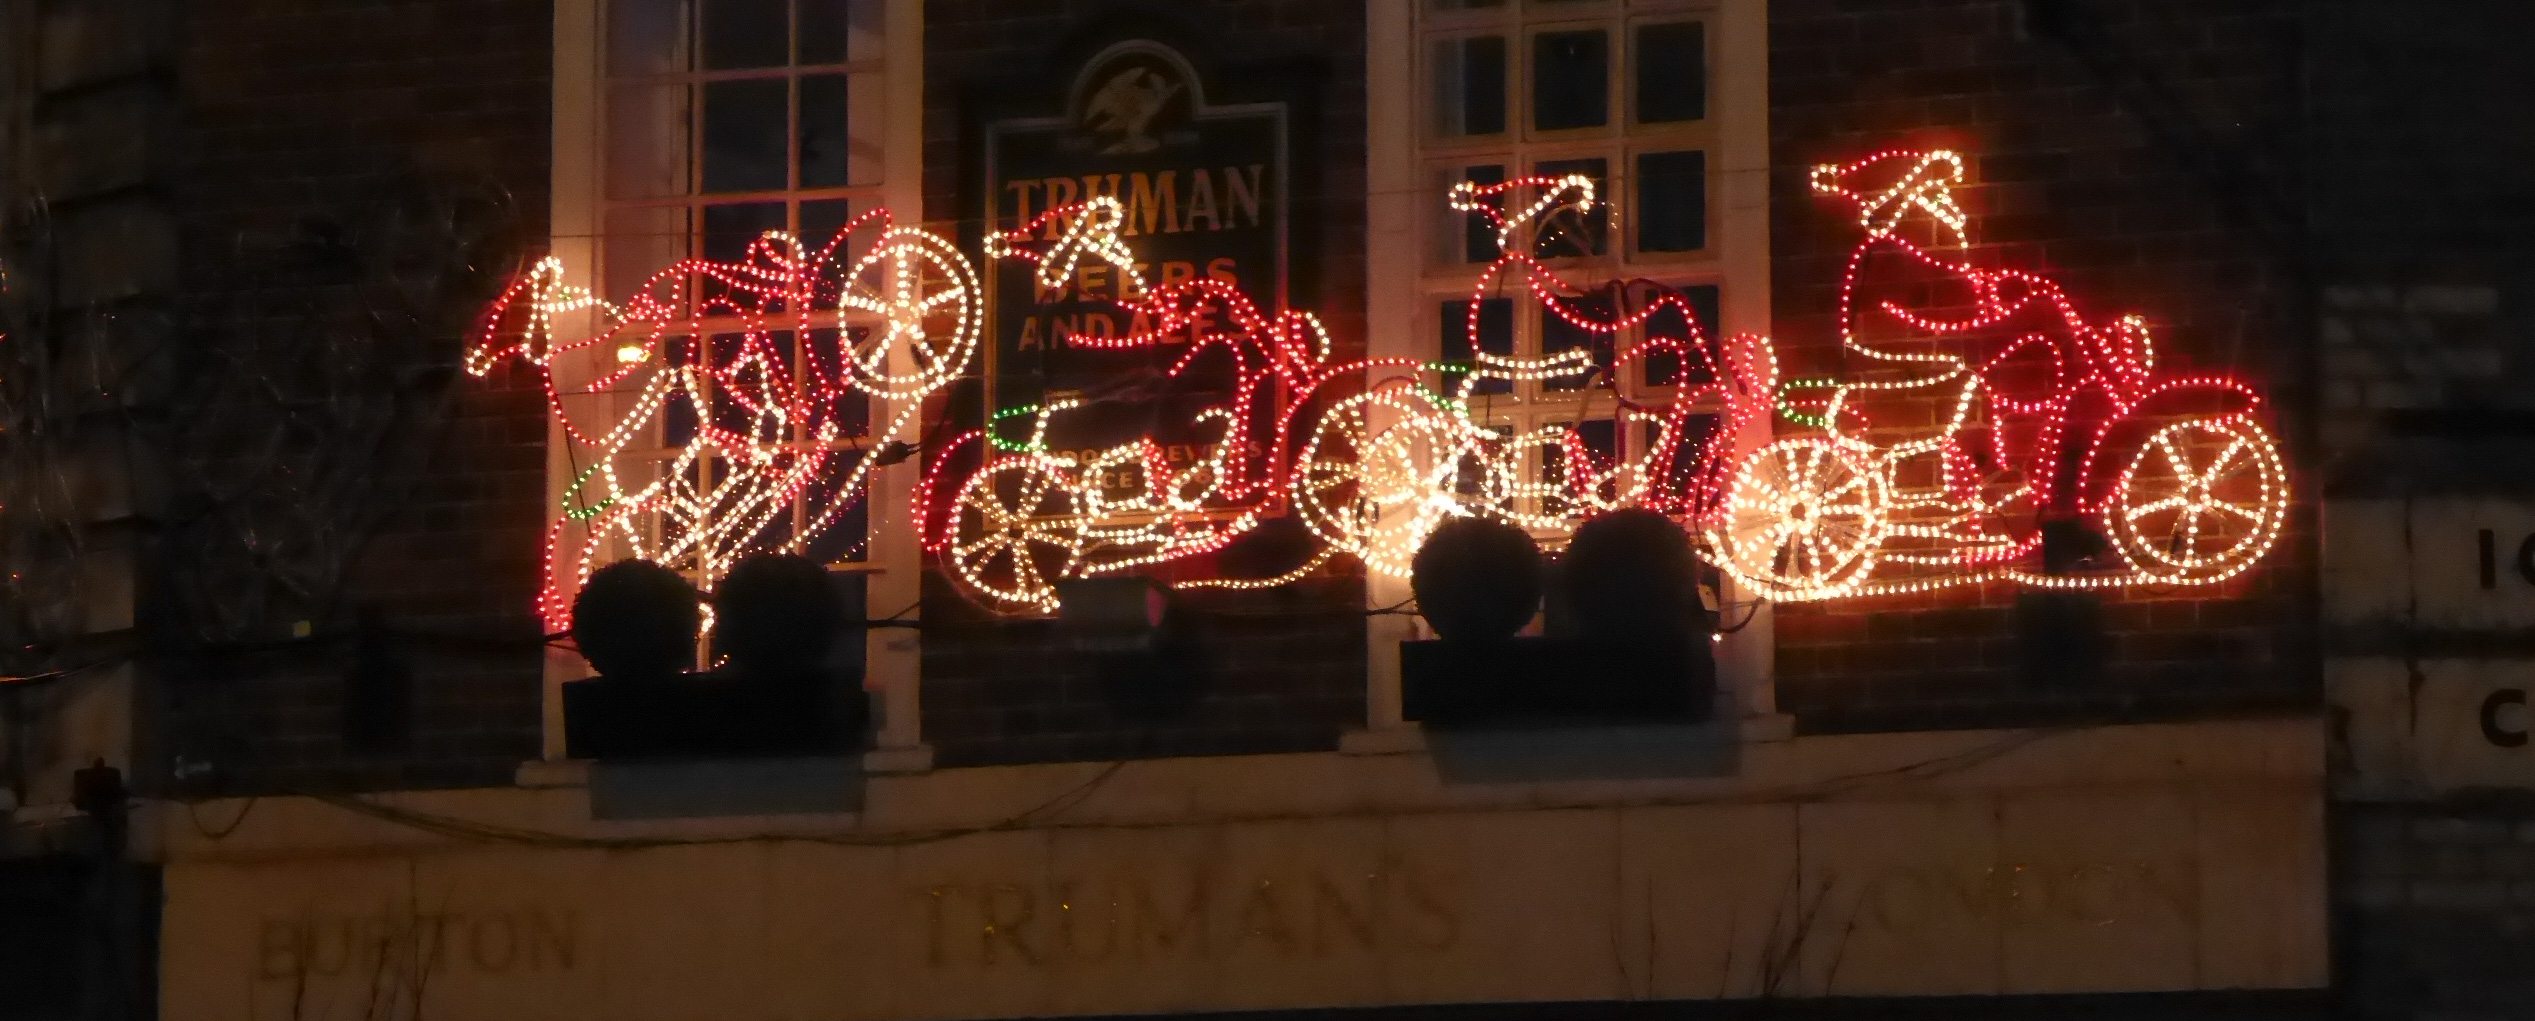 Santas on bikes